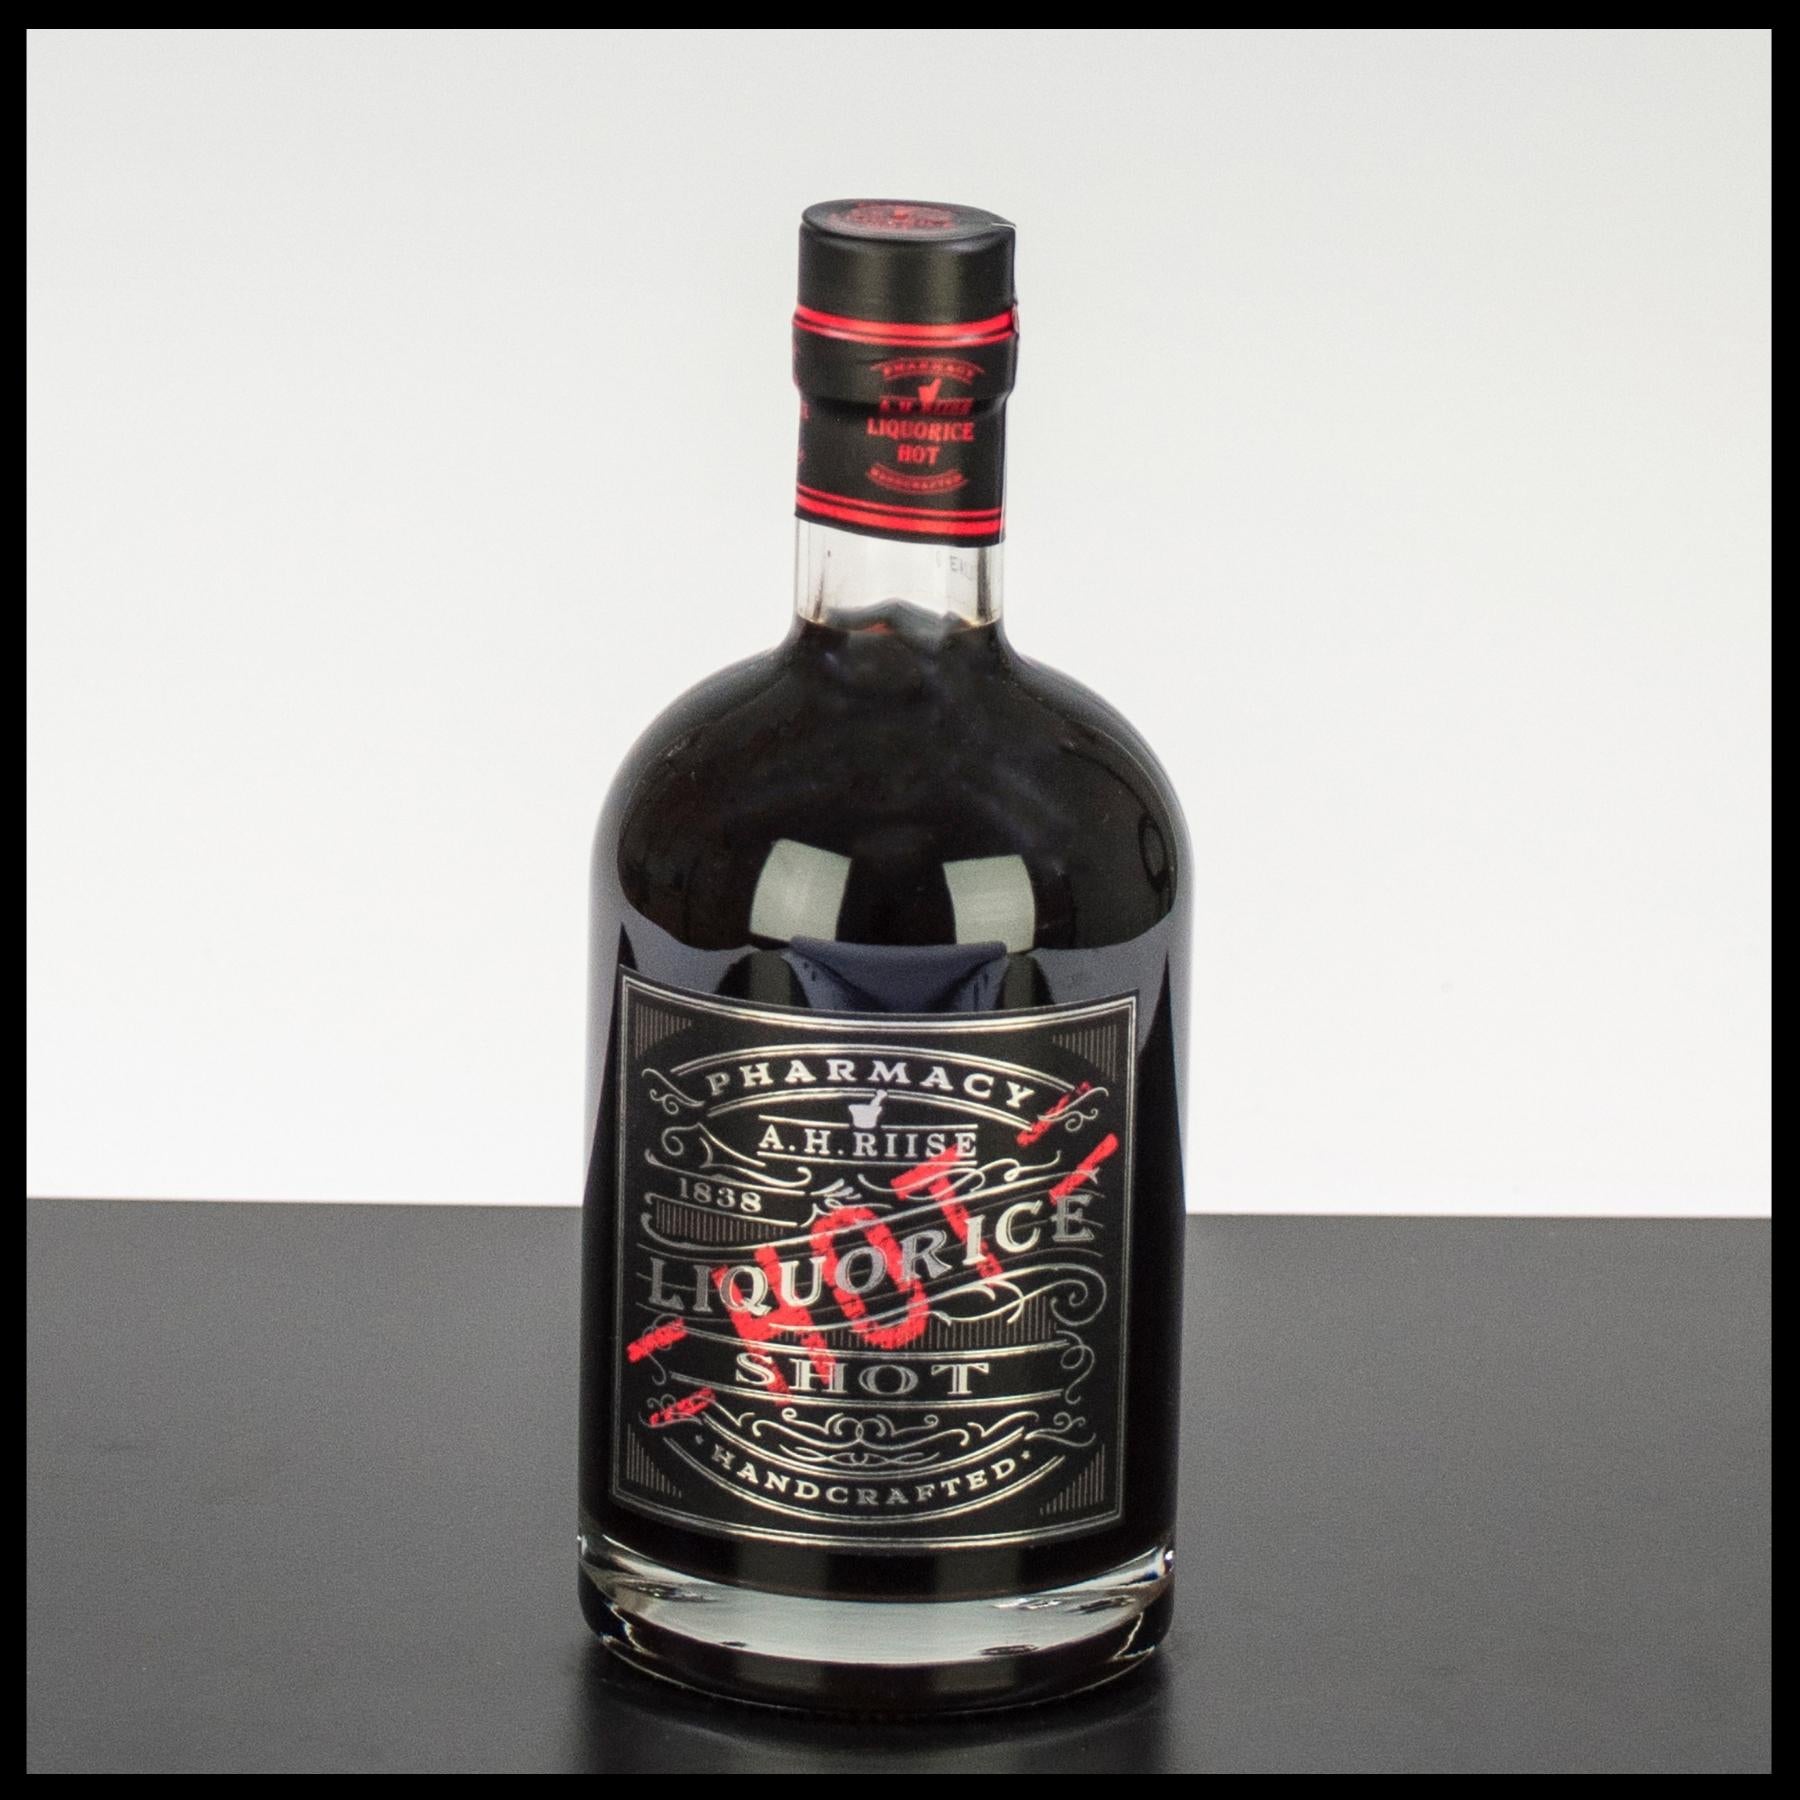 AH Riise Pharmacy - Liquorice Hot Shot 18° - ancienne bouteille - Rhum  Attitude